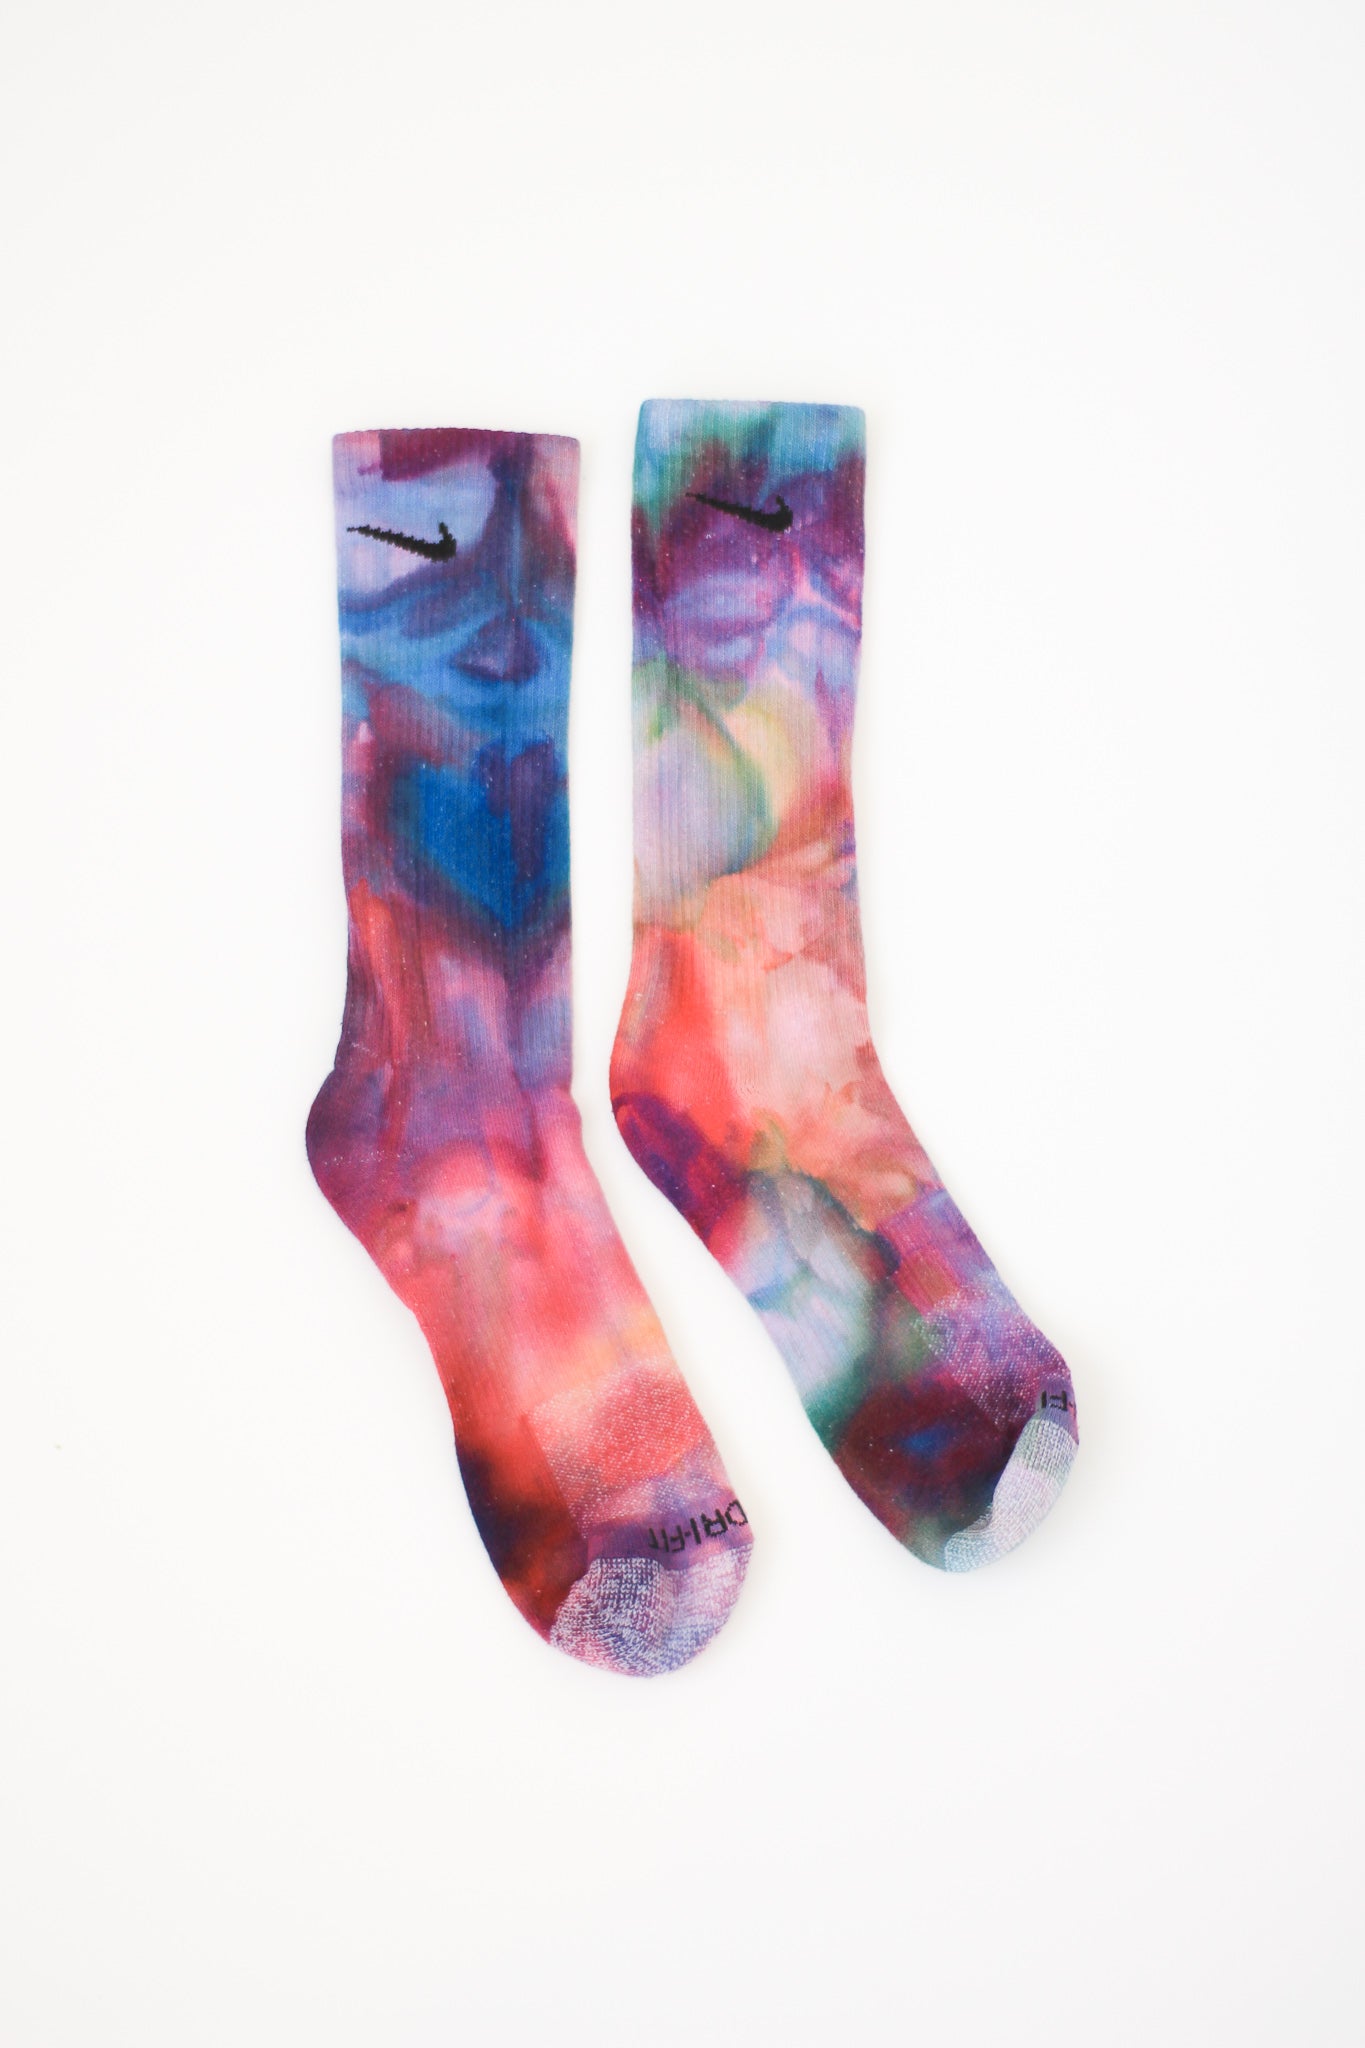 Nike Socks - riverside tool & dye